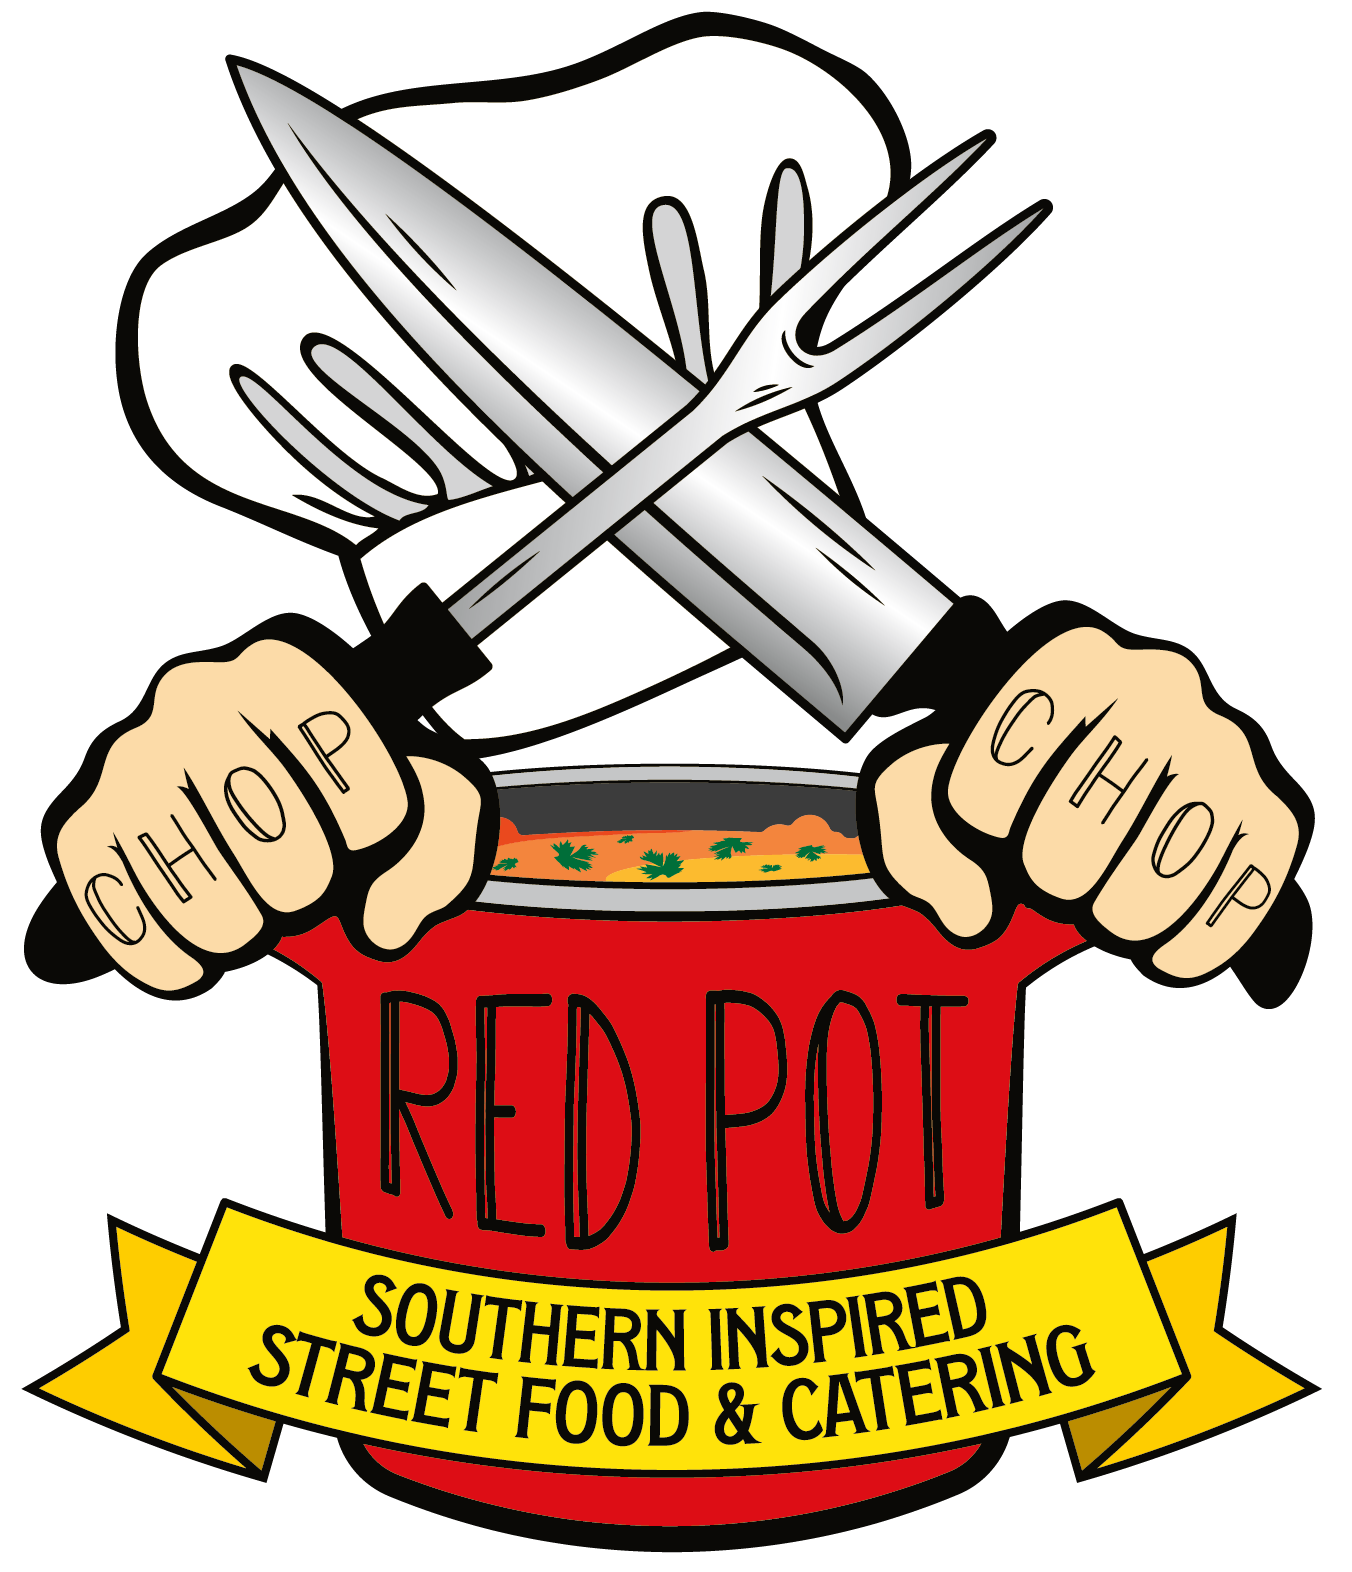 https://chopchopredpot.com/wp-content/uploads/2022/06/Chop-Chop-Red-Pot-Logo.png